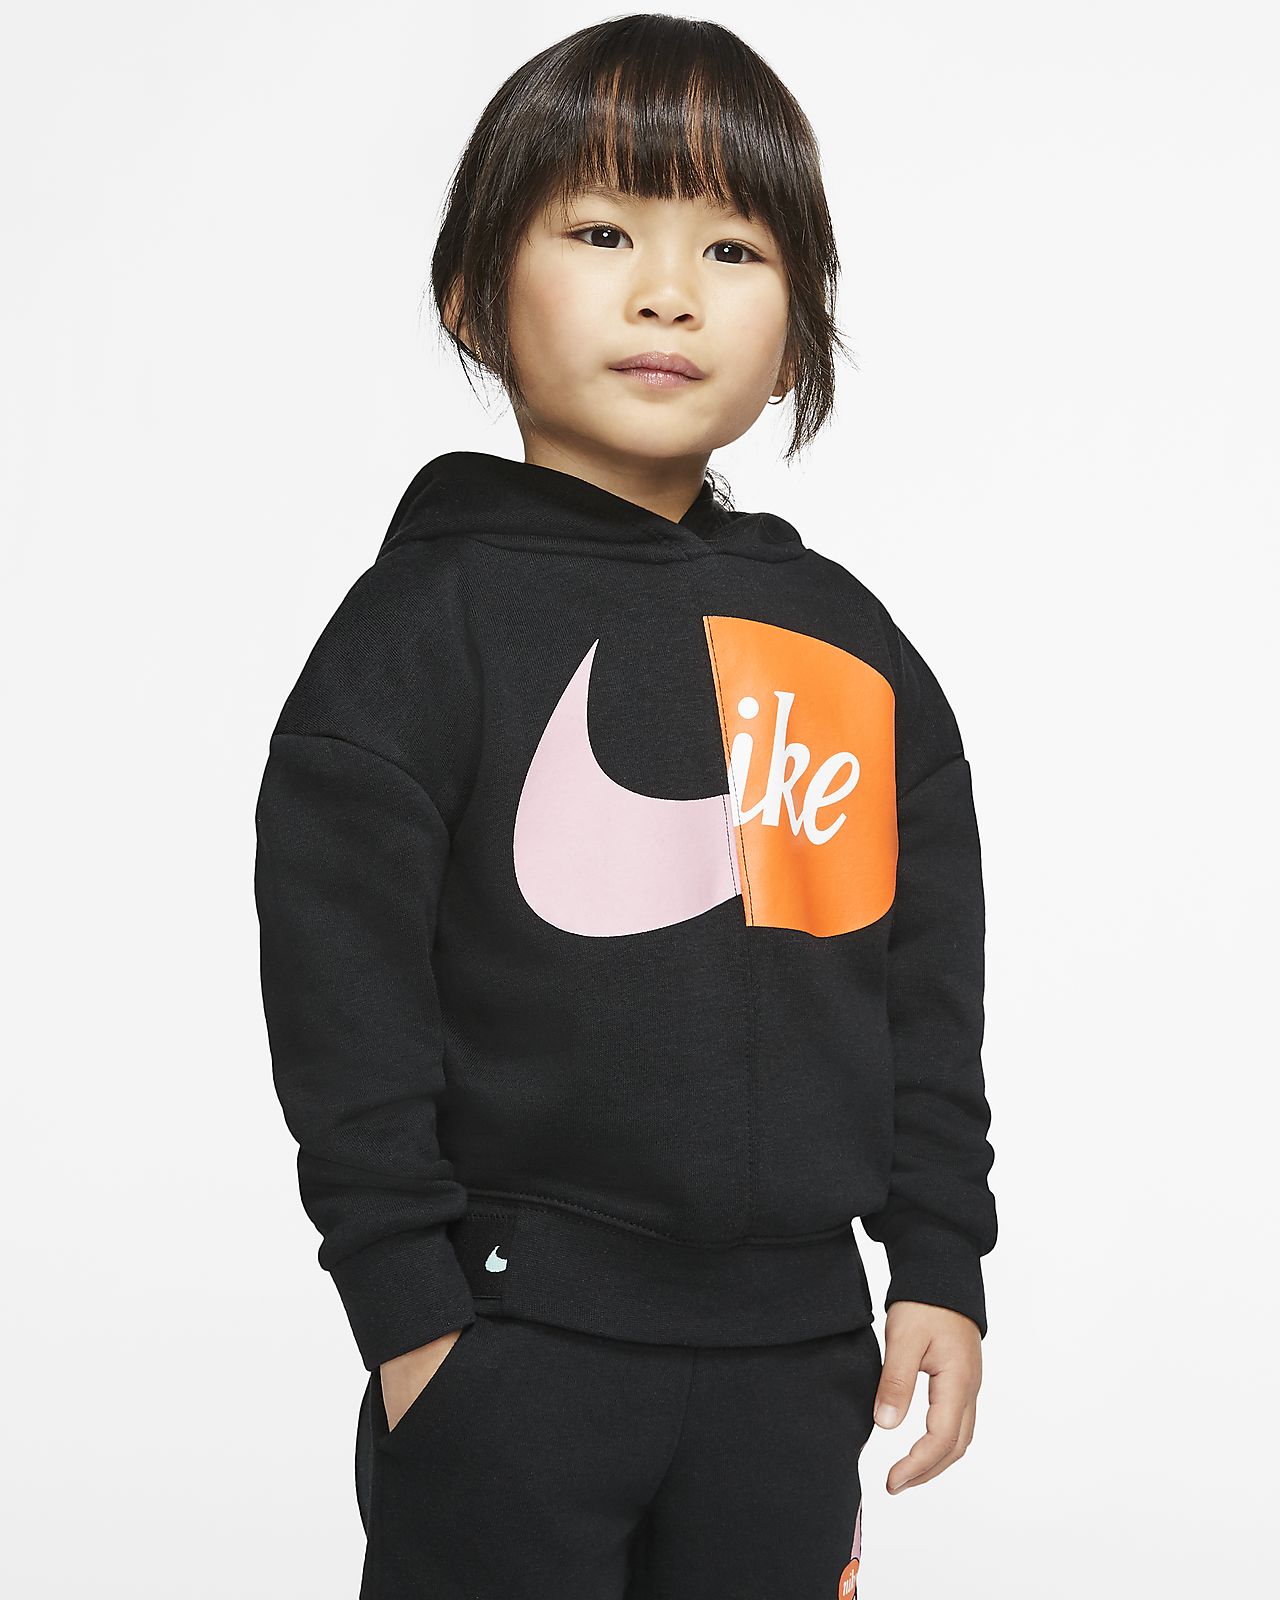 nike hoodie for toddler girl